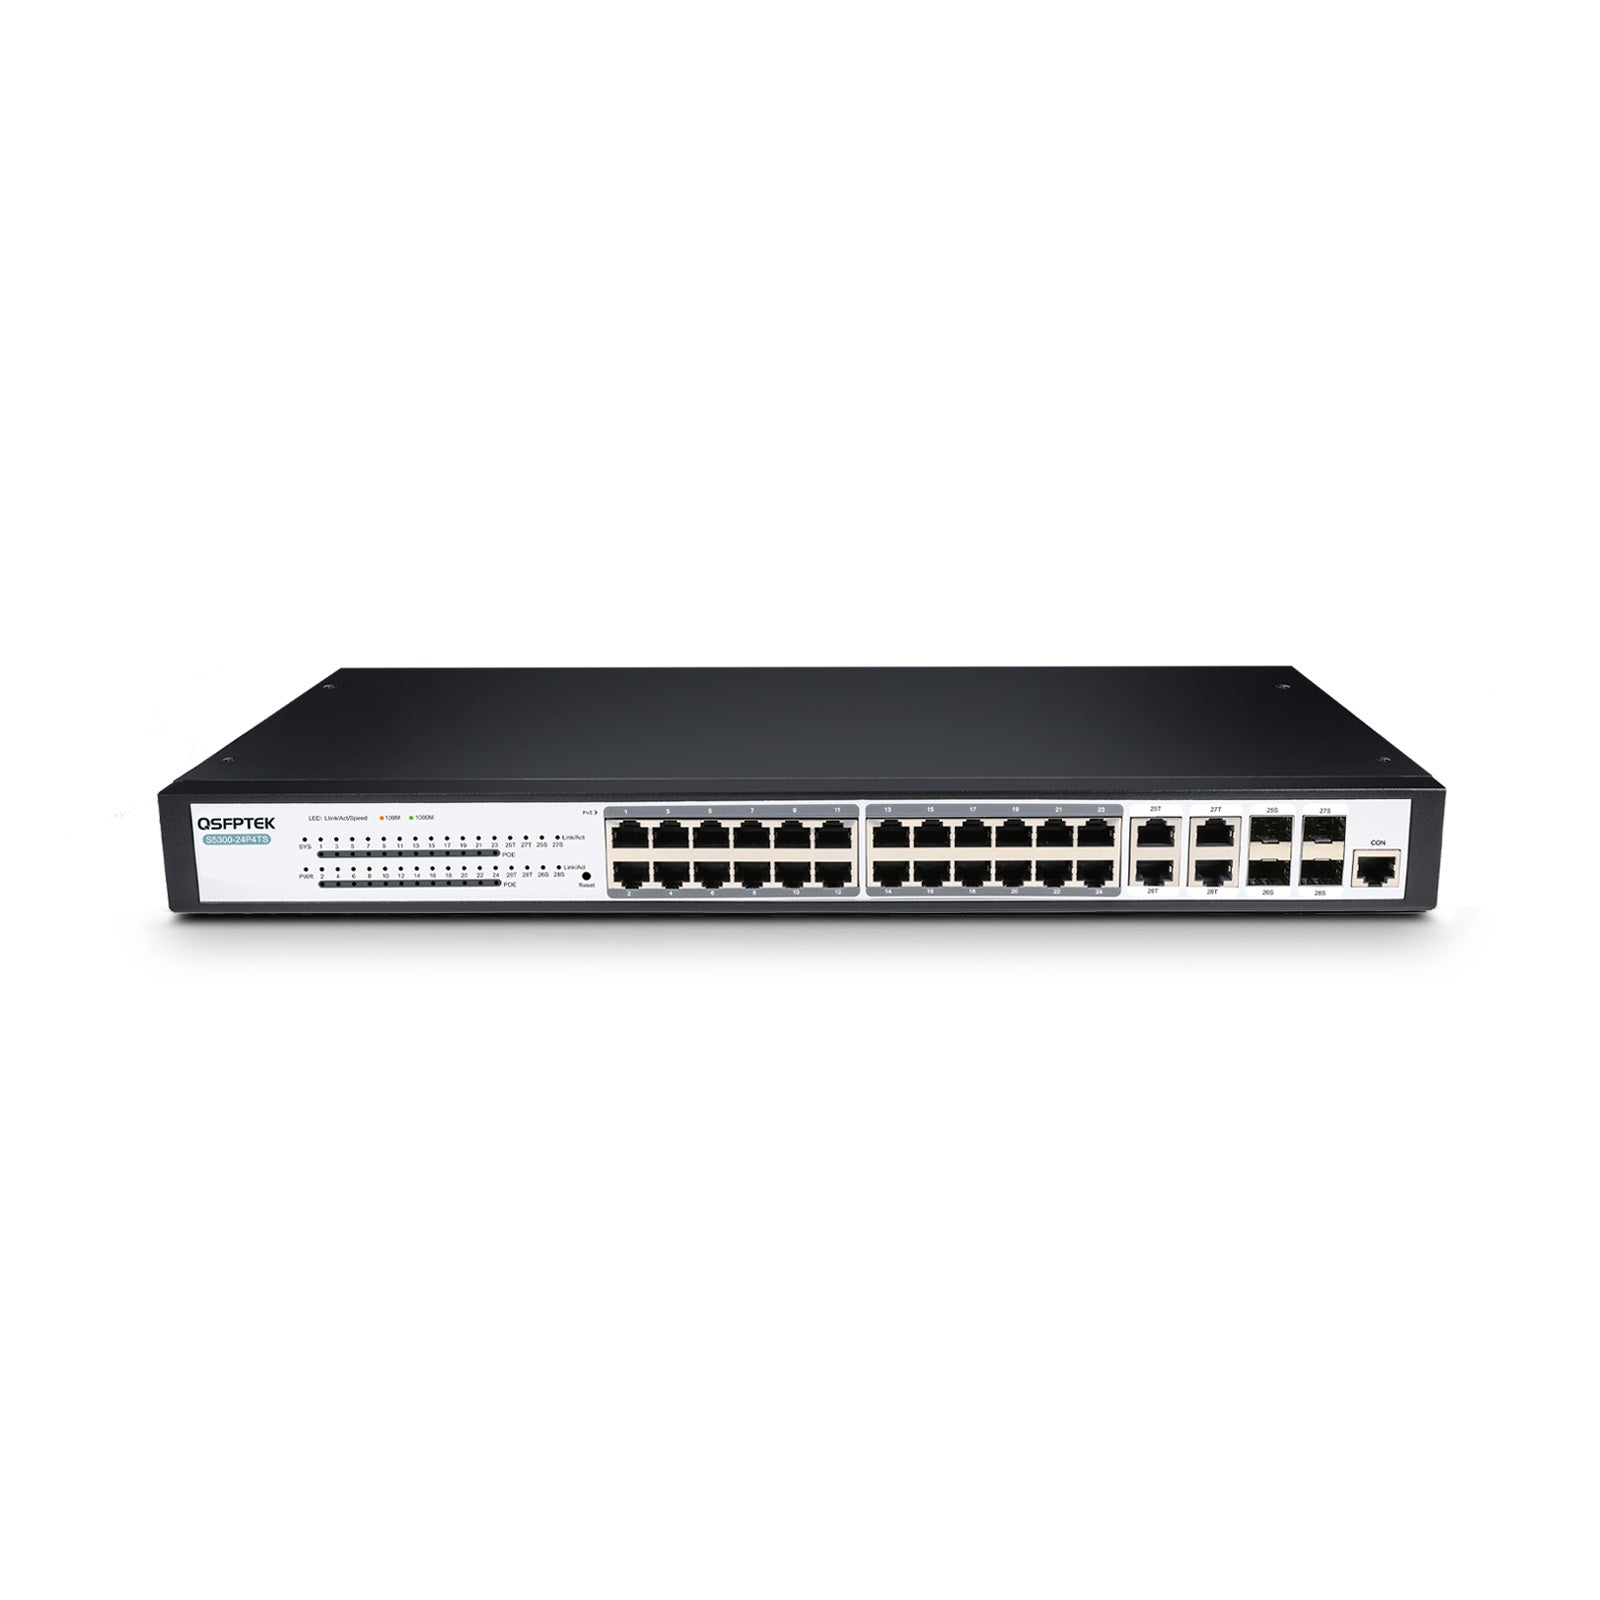 S5300-24P4TS, 24-Port Gigabit Ethernet L2+ PoE+ Fanless Switch, 24x 10/100/1000BASE-T RJ45 PoE ports with 4x 1G RJ45/SFP Combo Ports